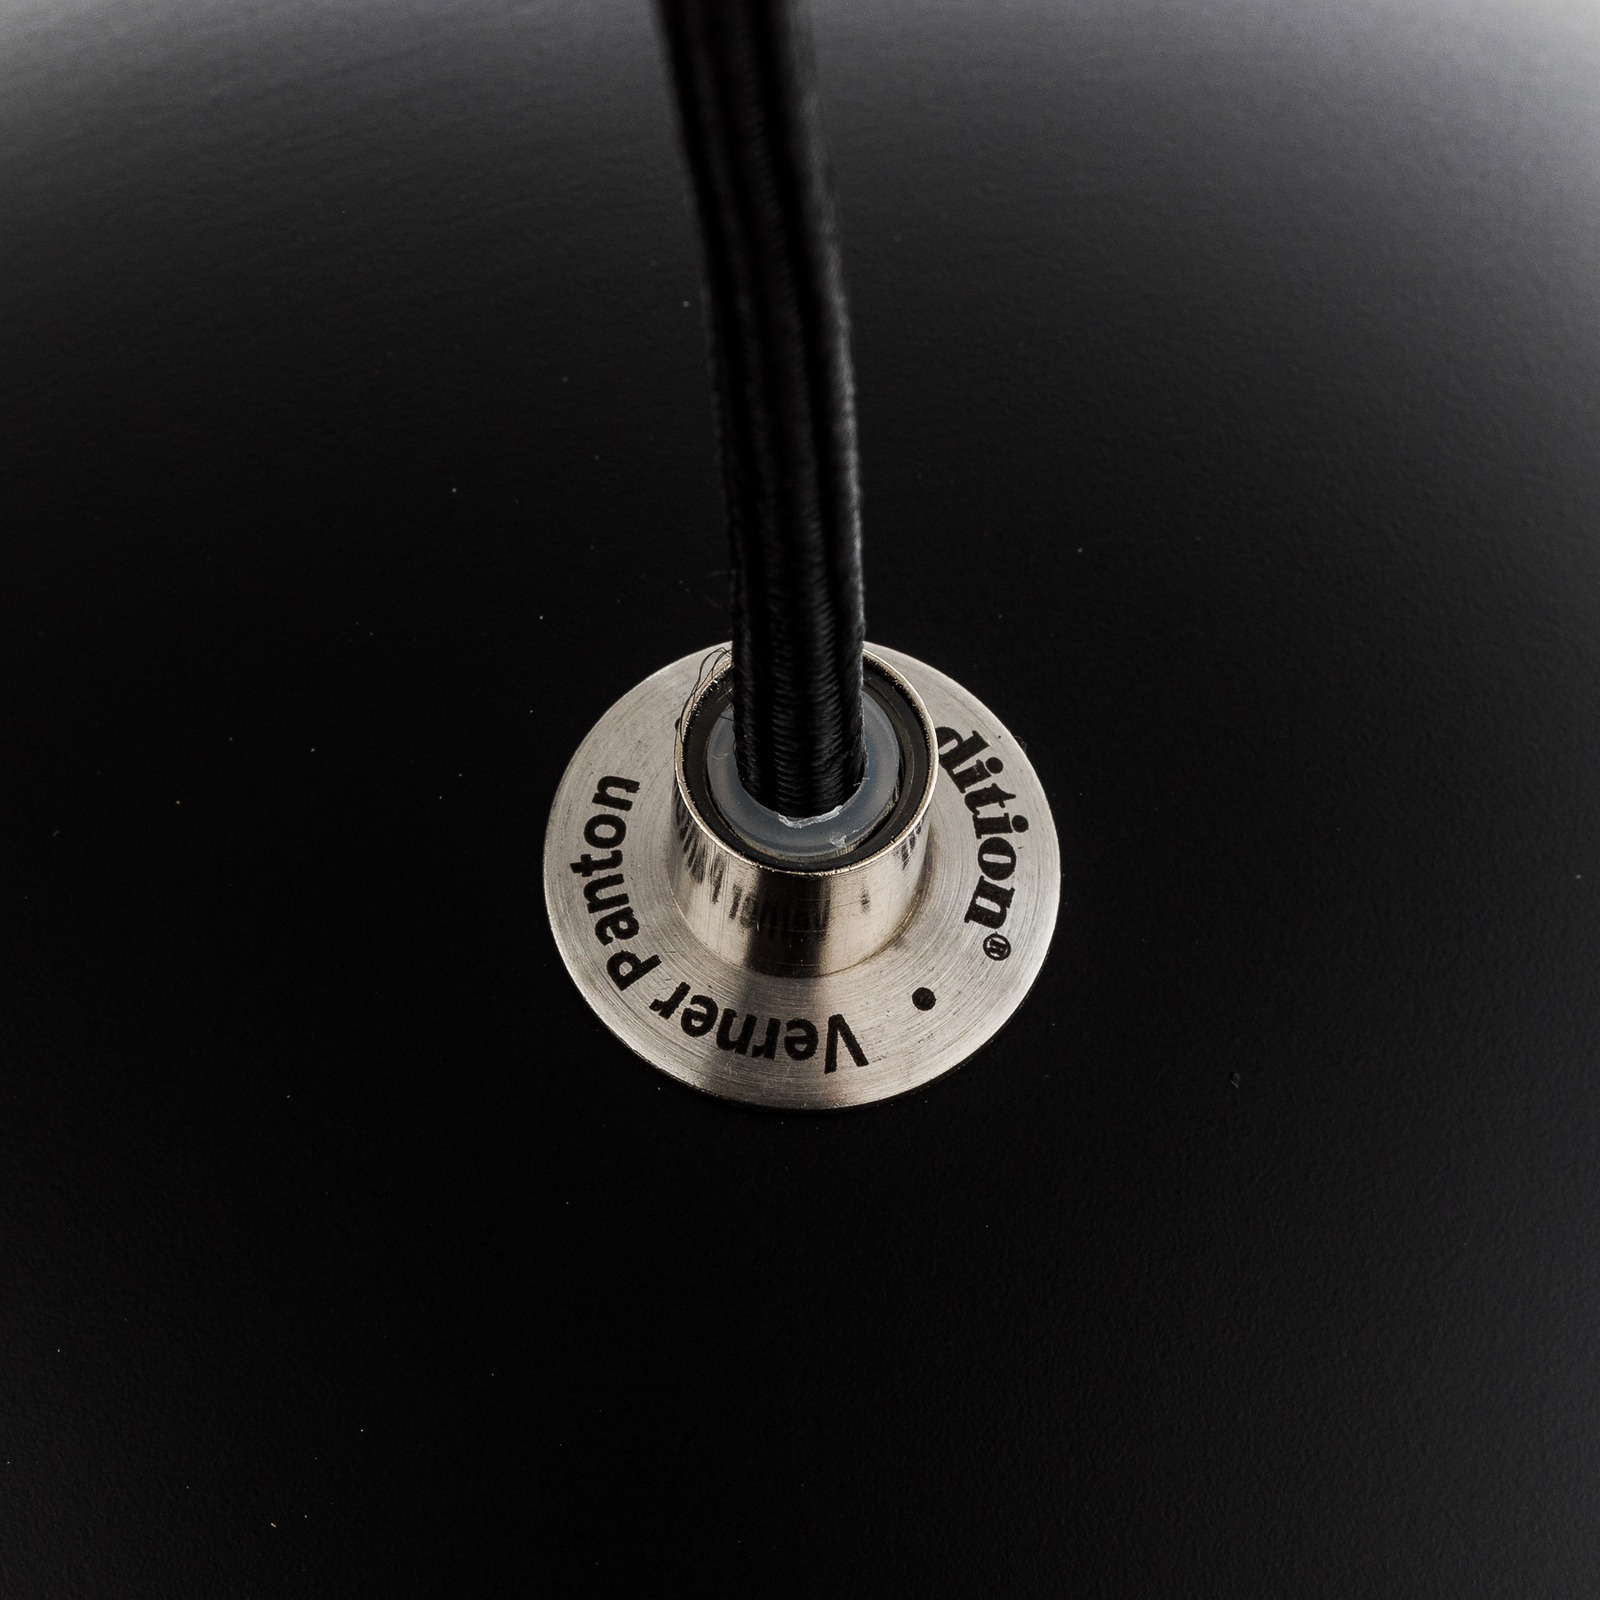 &Традиционна висяща лампа Topan VP6, Ø 21 cm, черен мат